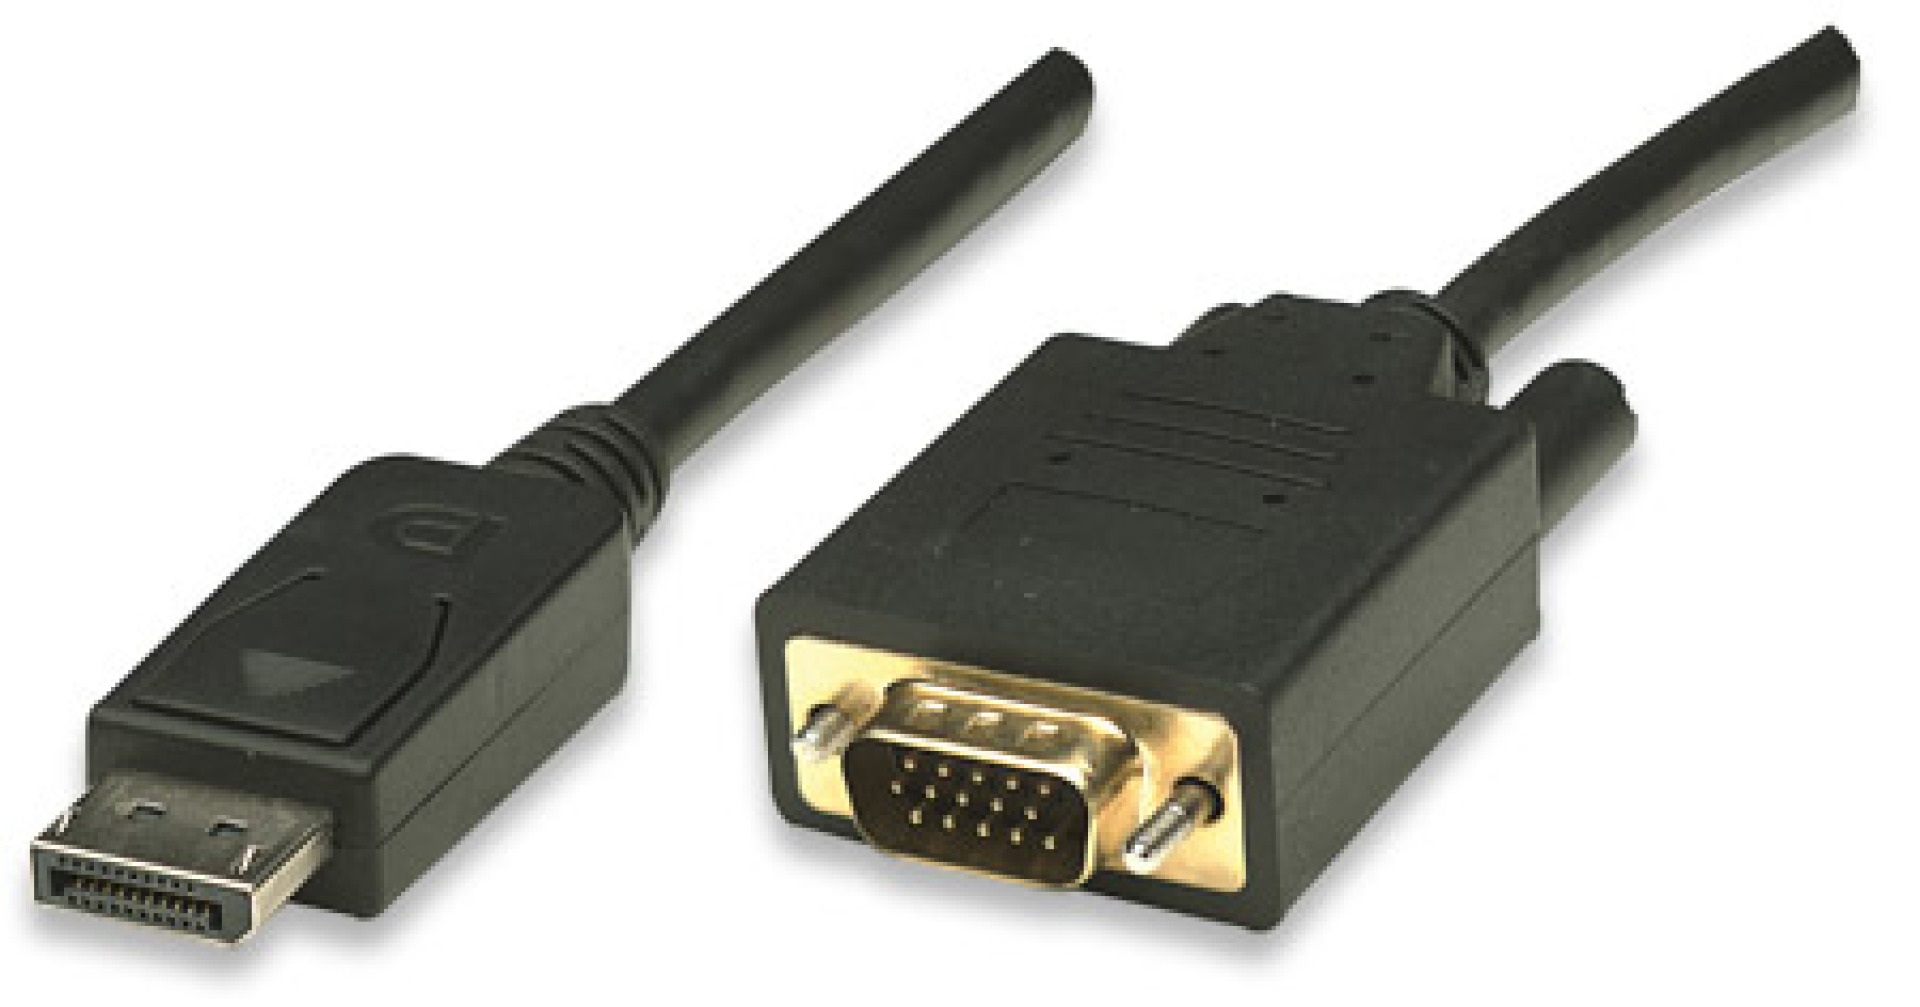 DisplayPort to VGA converter cable, black, 1.8 m